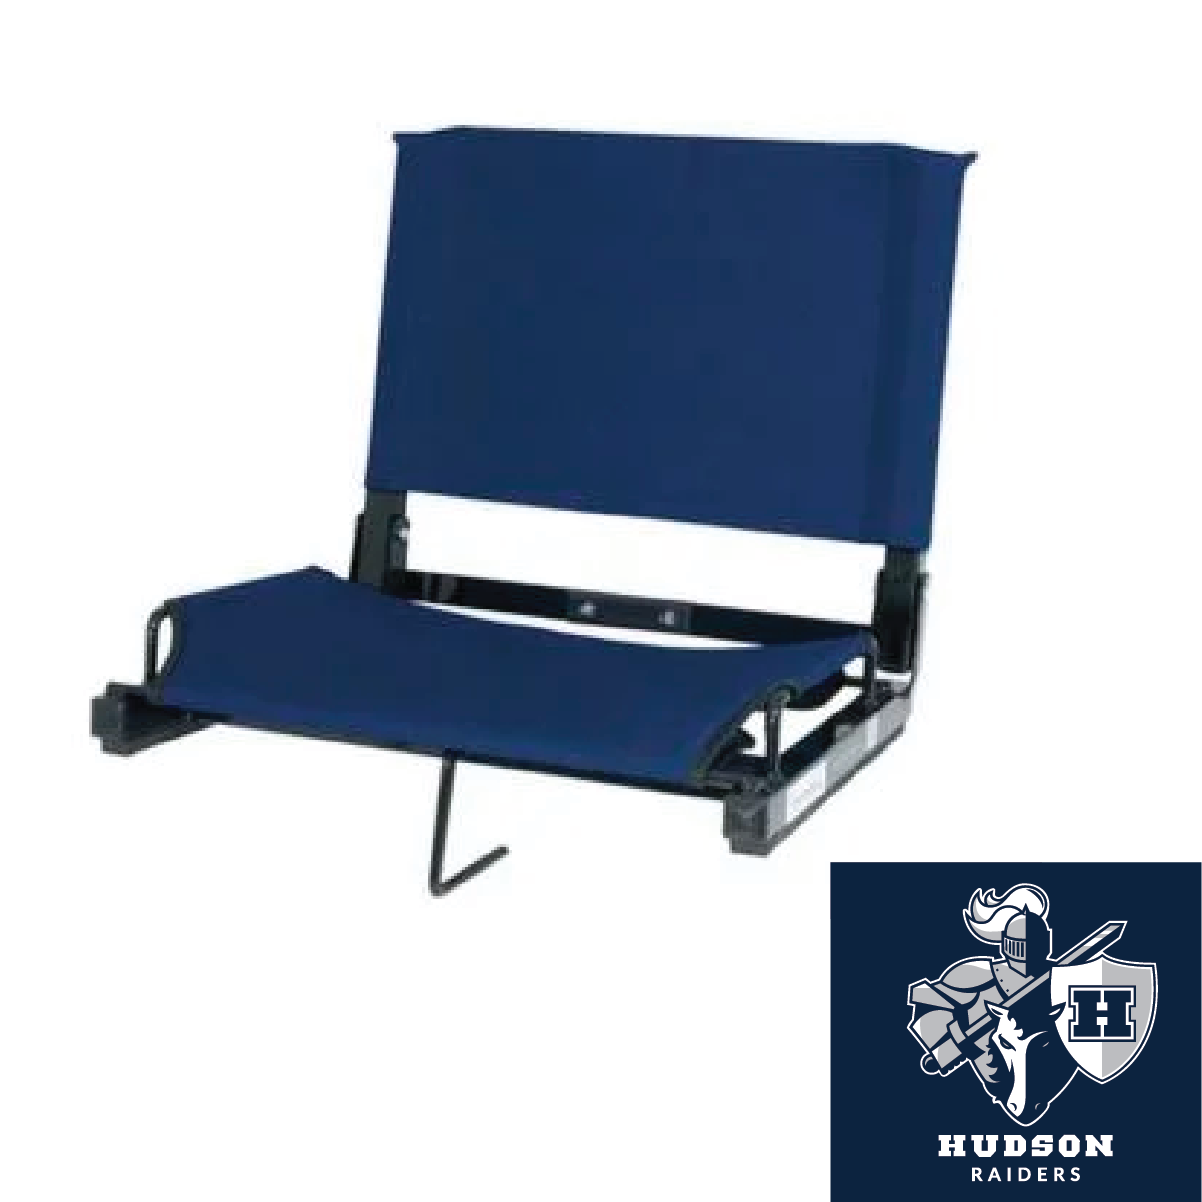 Hudson Raiders Bleacher Chair - Regular